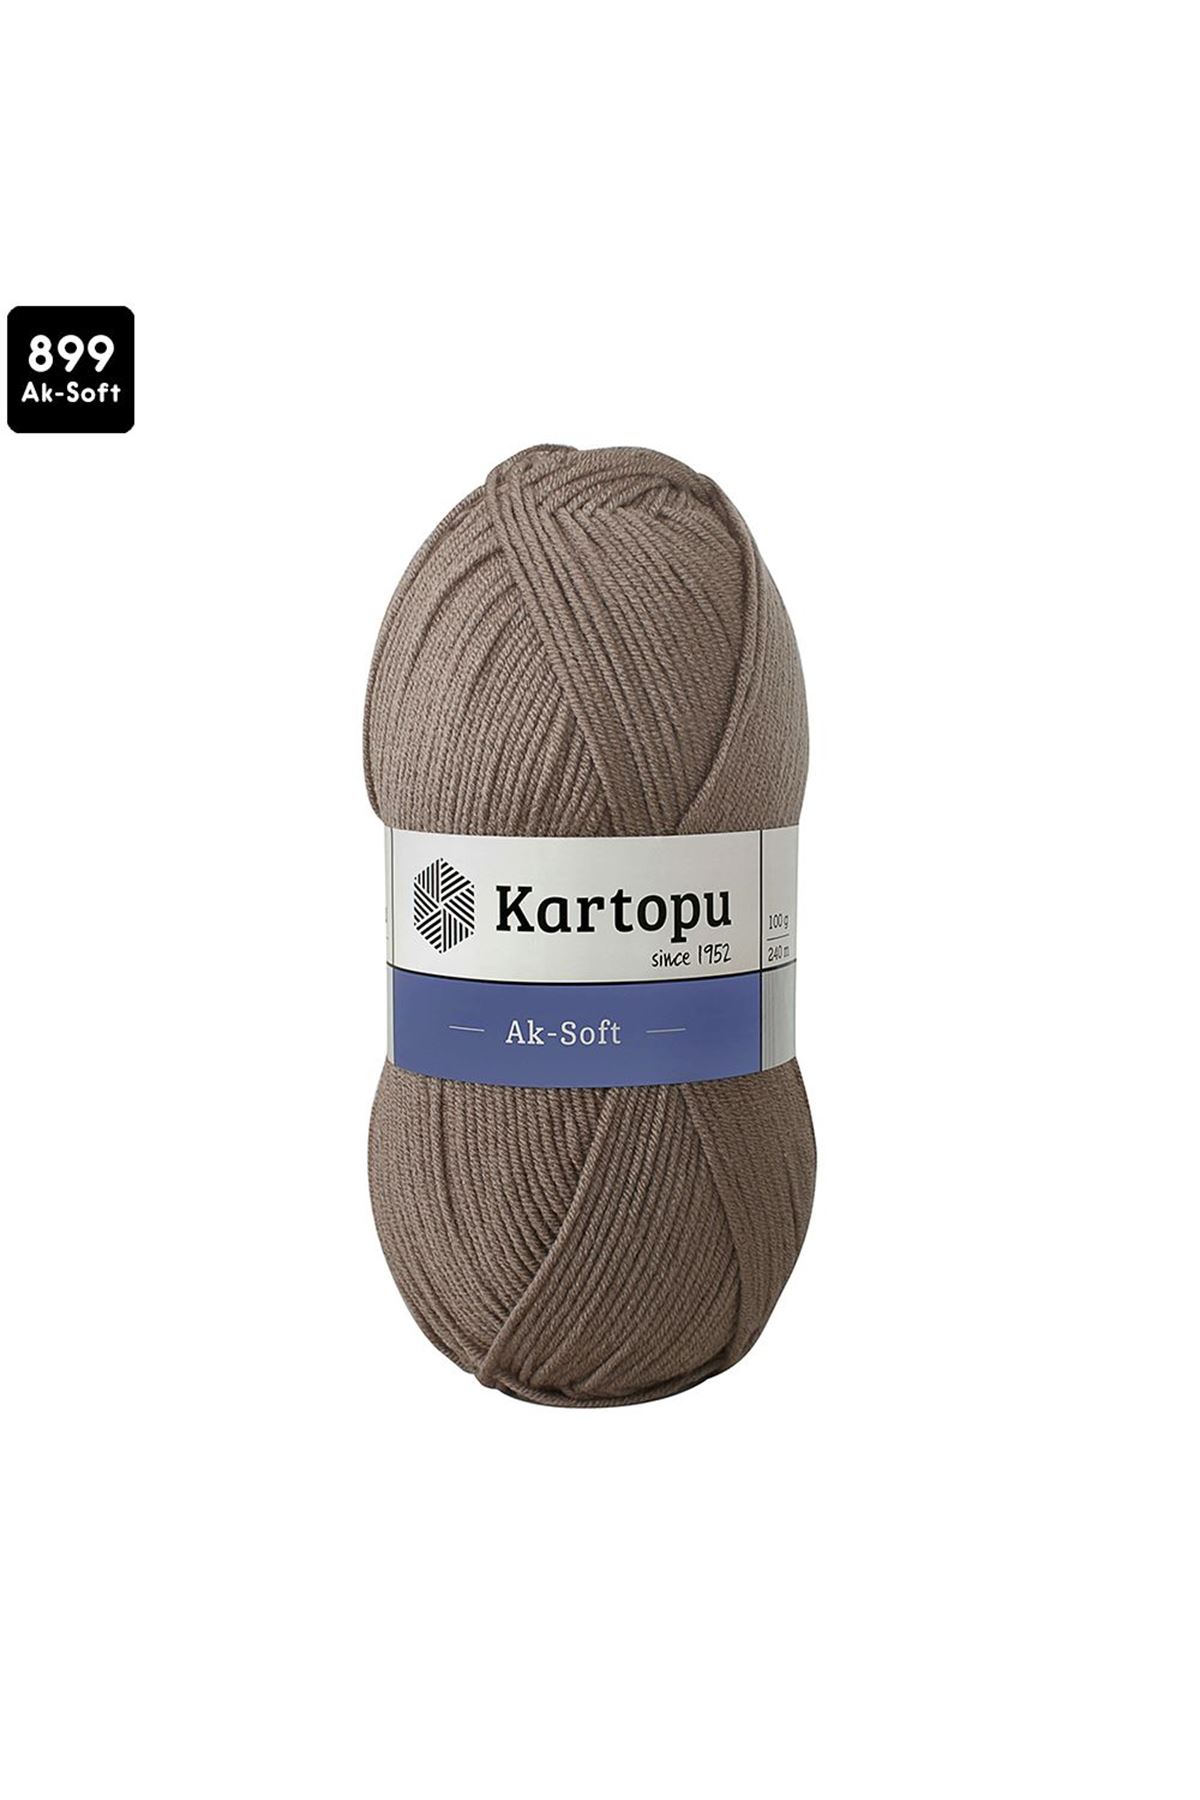 Kartopu Ak-Soft Renk No:899